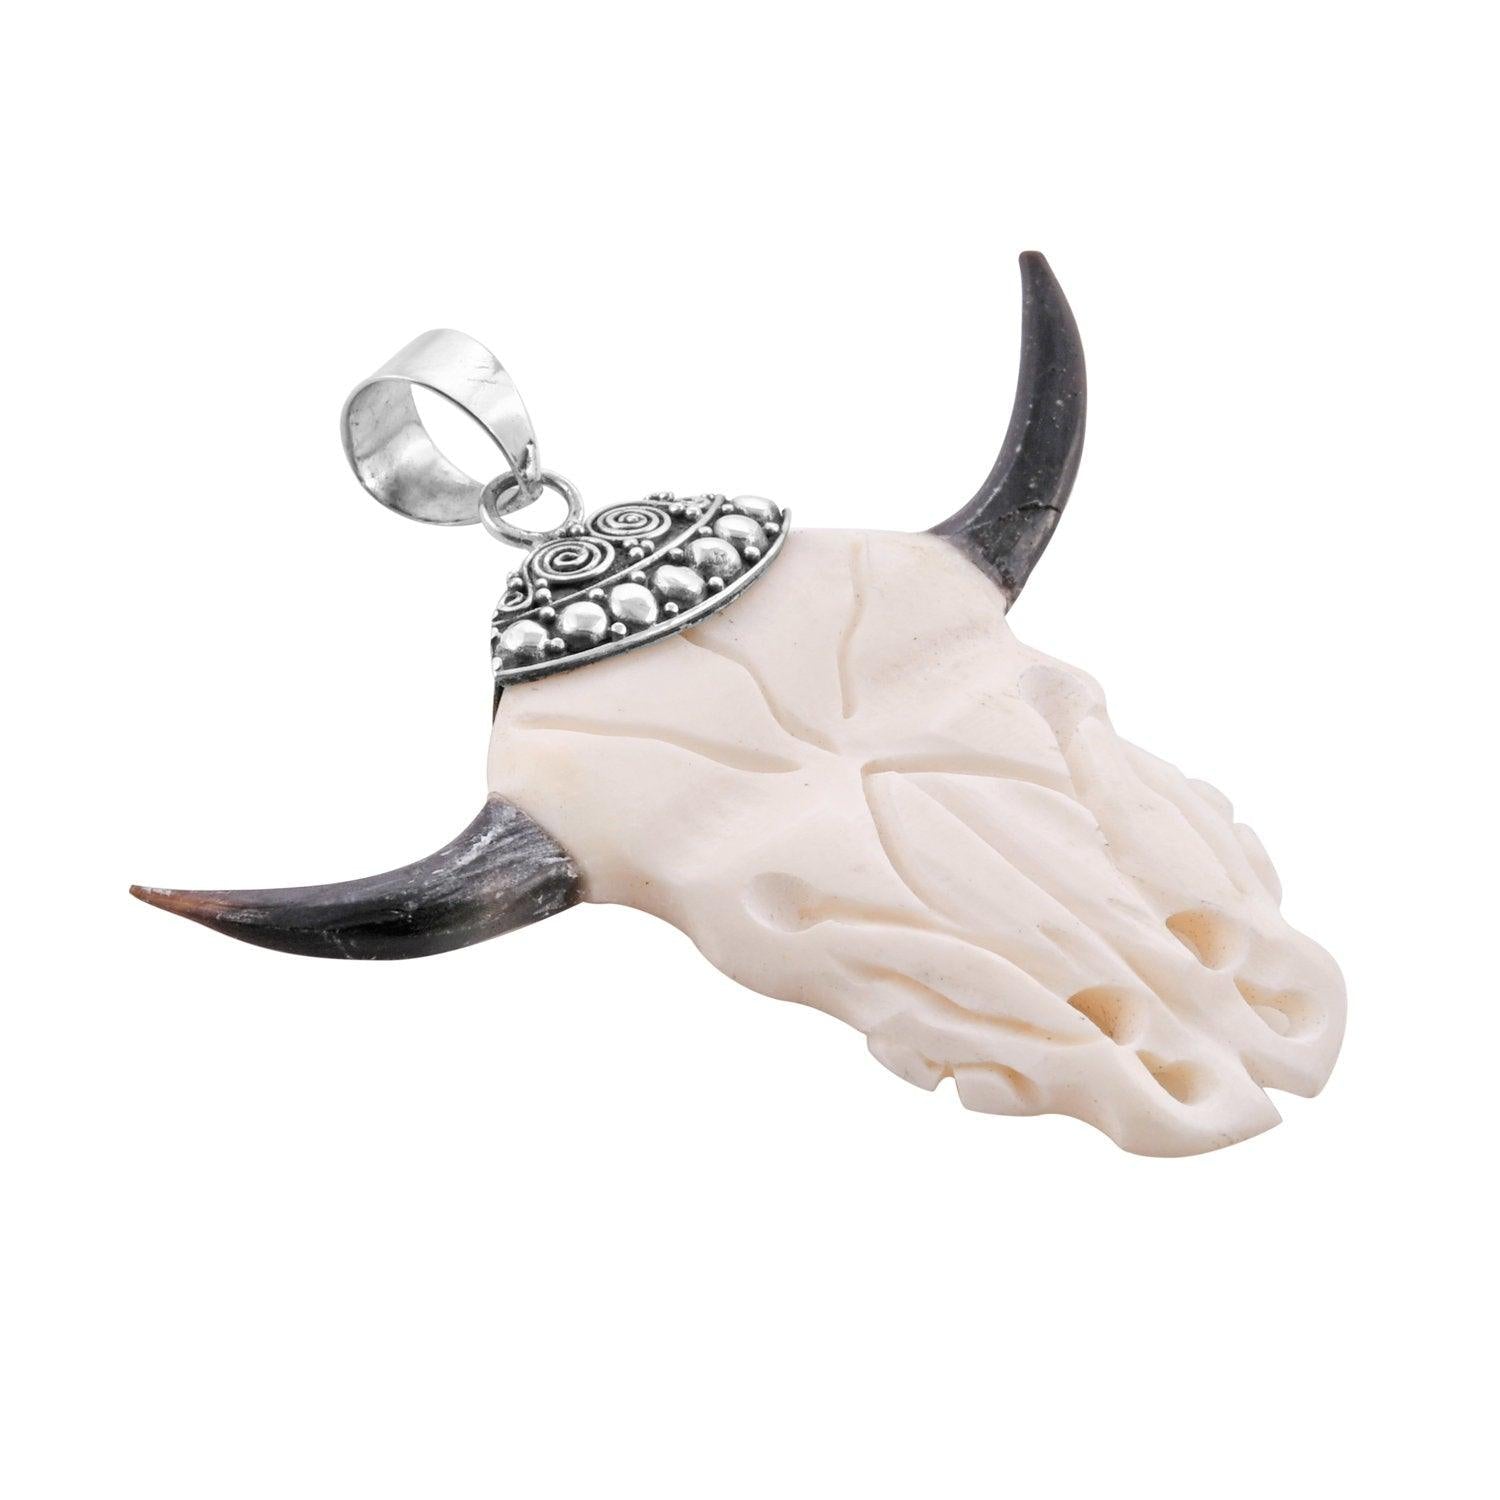 Handcrafted BULL Skull Head CARVED Bone Pendant in Sterling Silver - Inspiring Jewellery